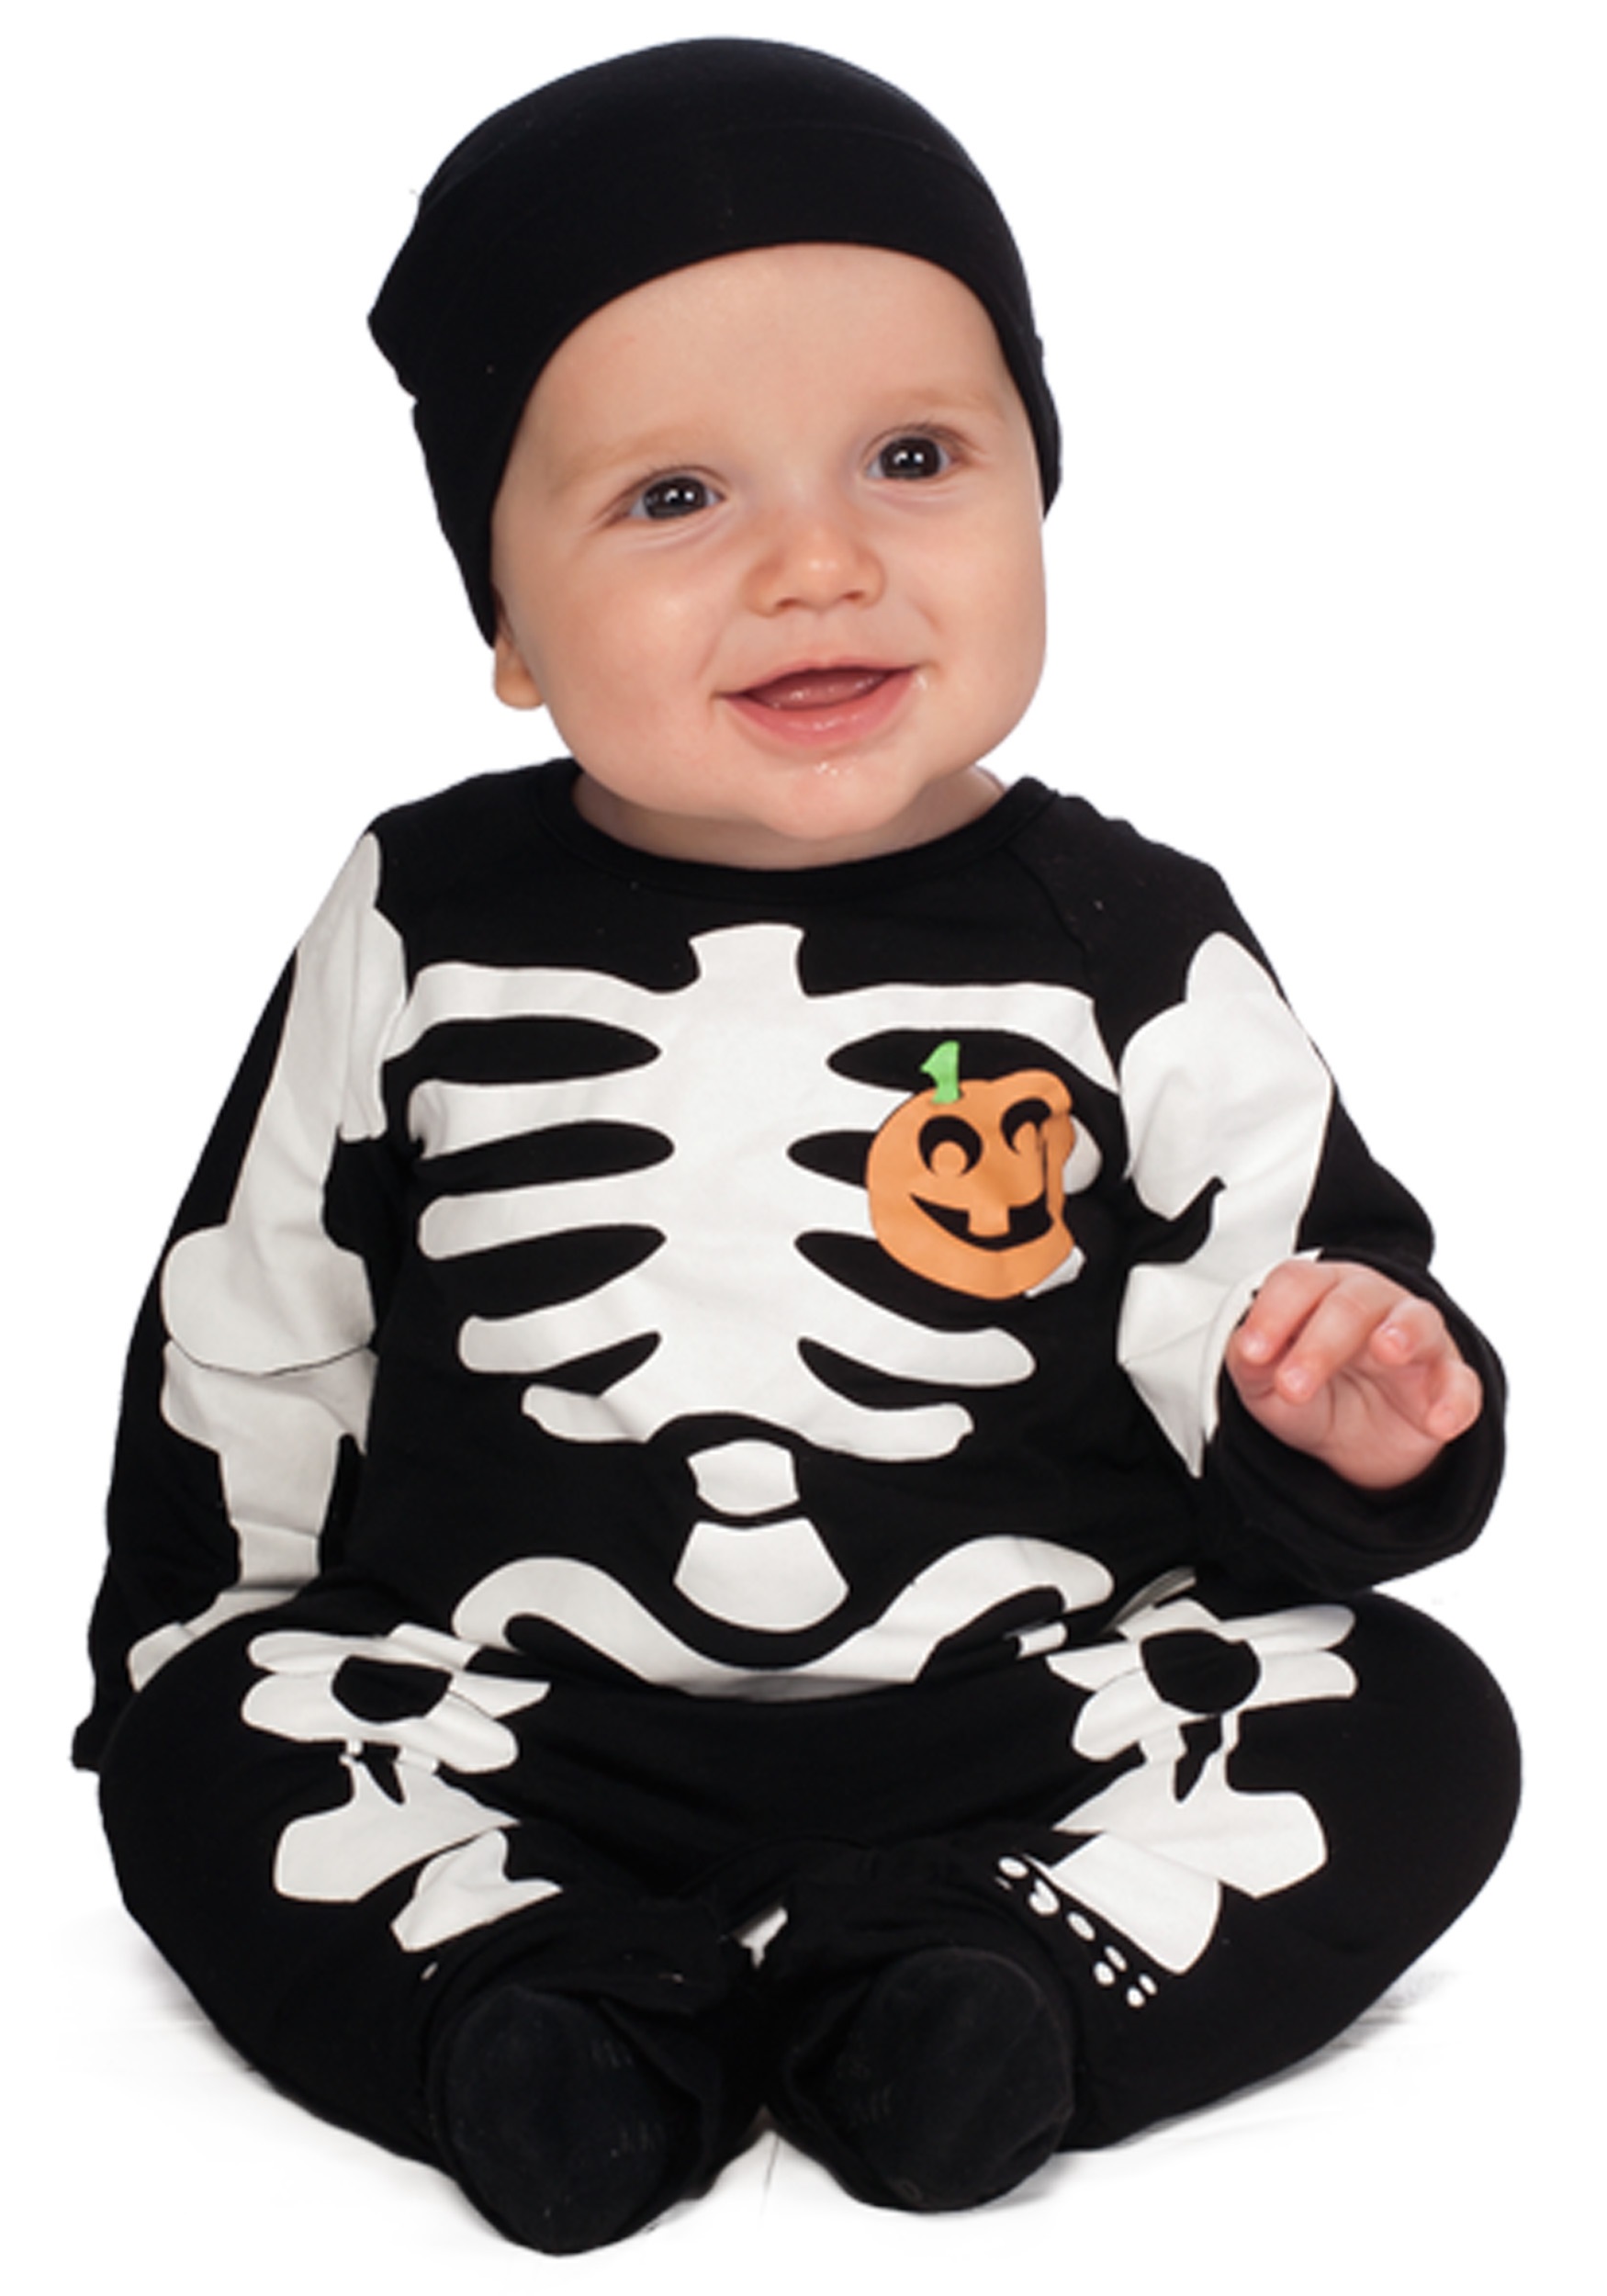 Infant Black Skeleton Costume | HalloweenCostumes.co.uk